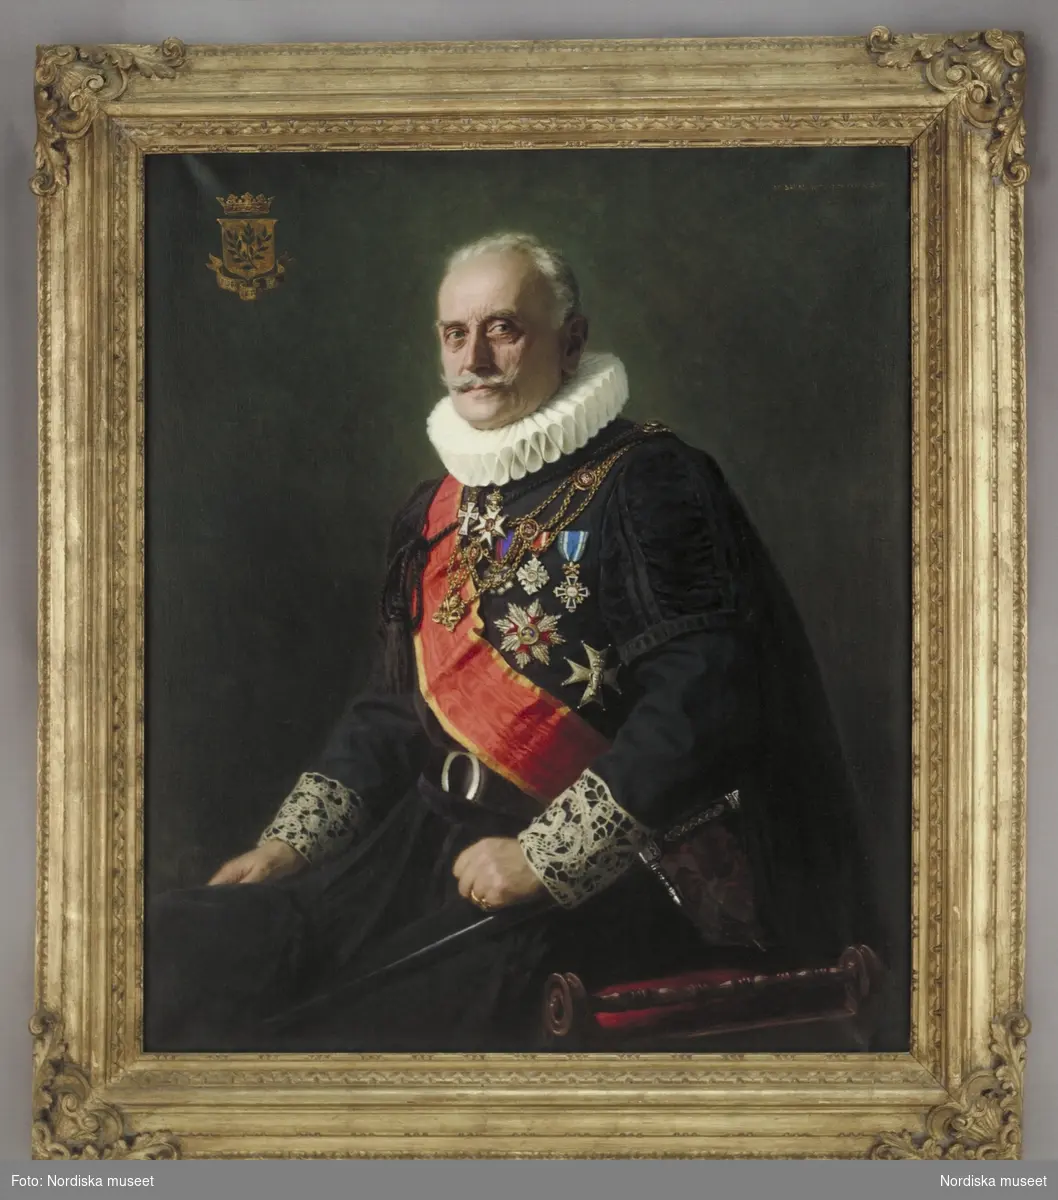 Porträtt av markis Claes Lagergren (1853-1930) i påvlig kammarherreuniform, utfört i Rom 1930 av Stephan Wladislaw Bakalowicz.